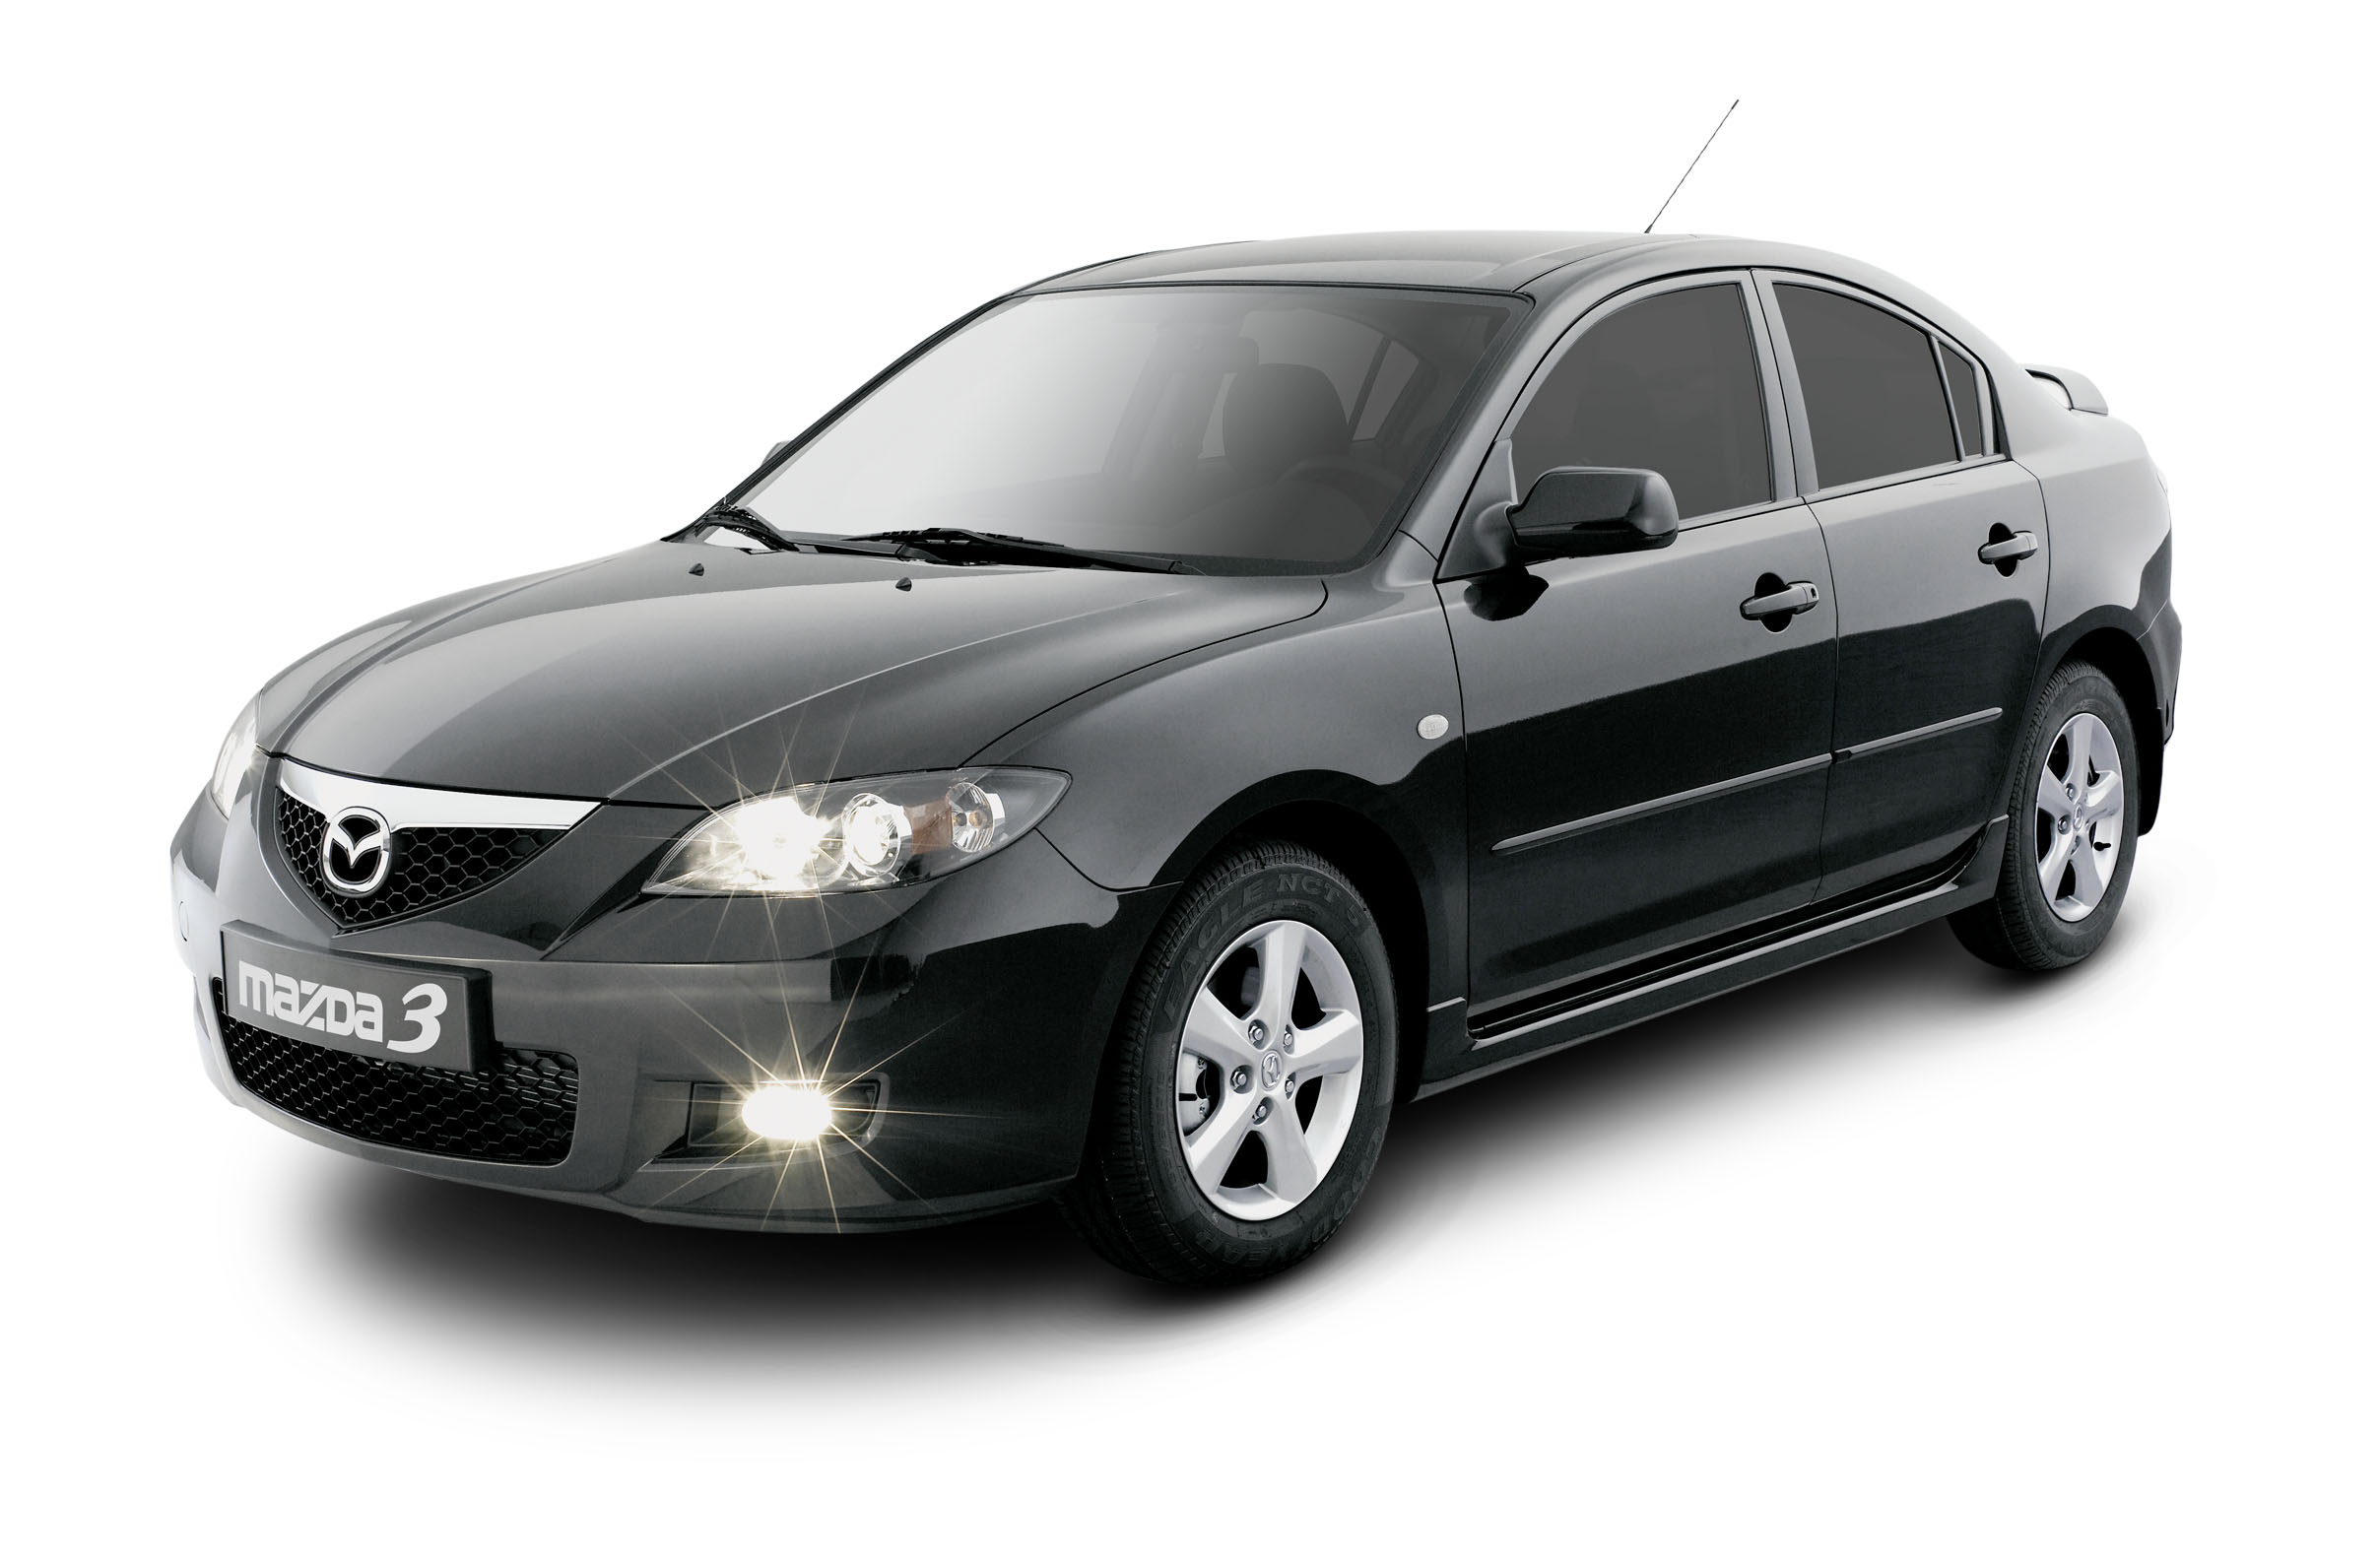 Mazda 3 bk 2003. Mazda 3 BK. Mazda 3 BK седан. Mazda 3 1 BK 2003-2009. Мазда 3 седан 2003.